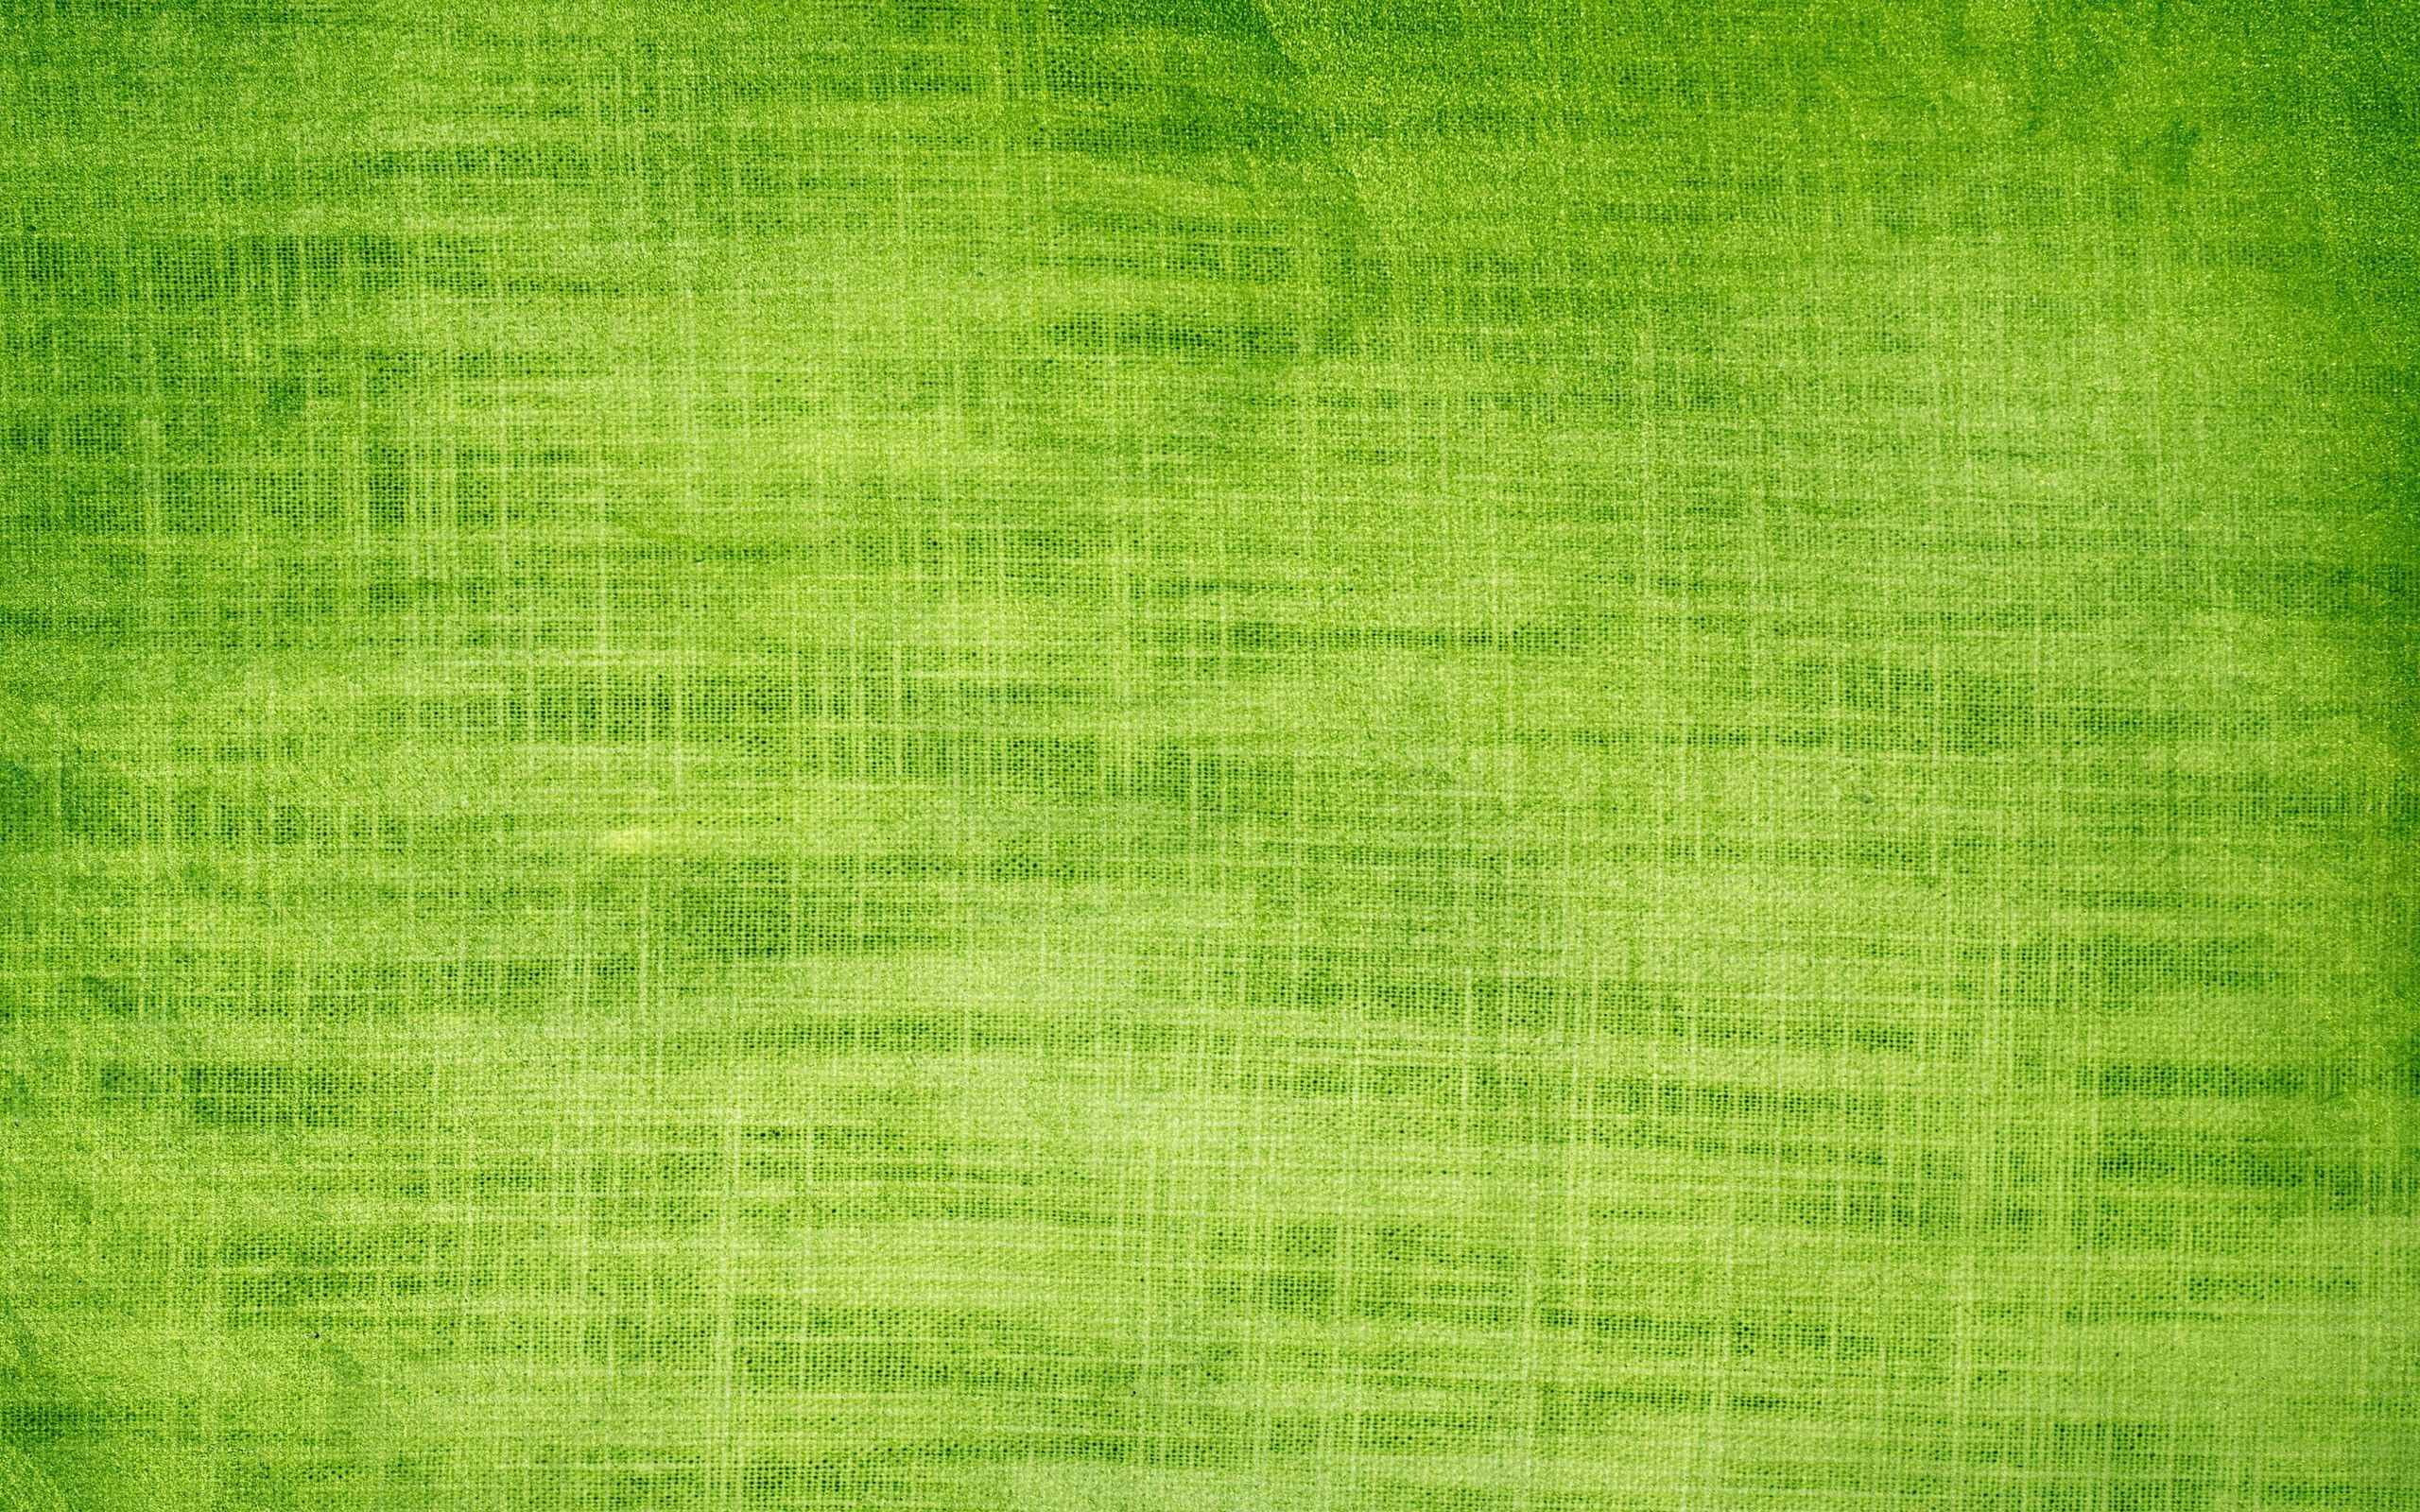 2560x1600 plain hd backgrounds resume green background hd wallpaper pinterest